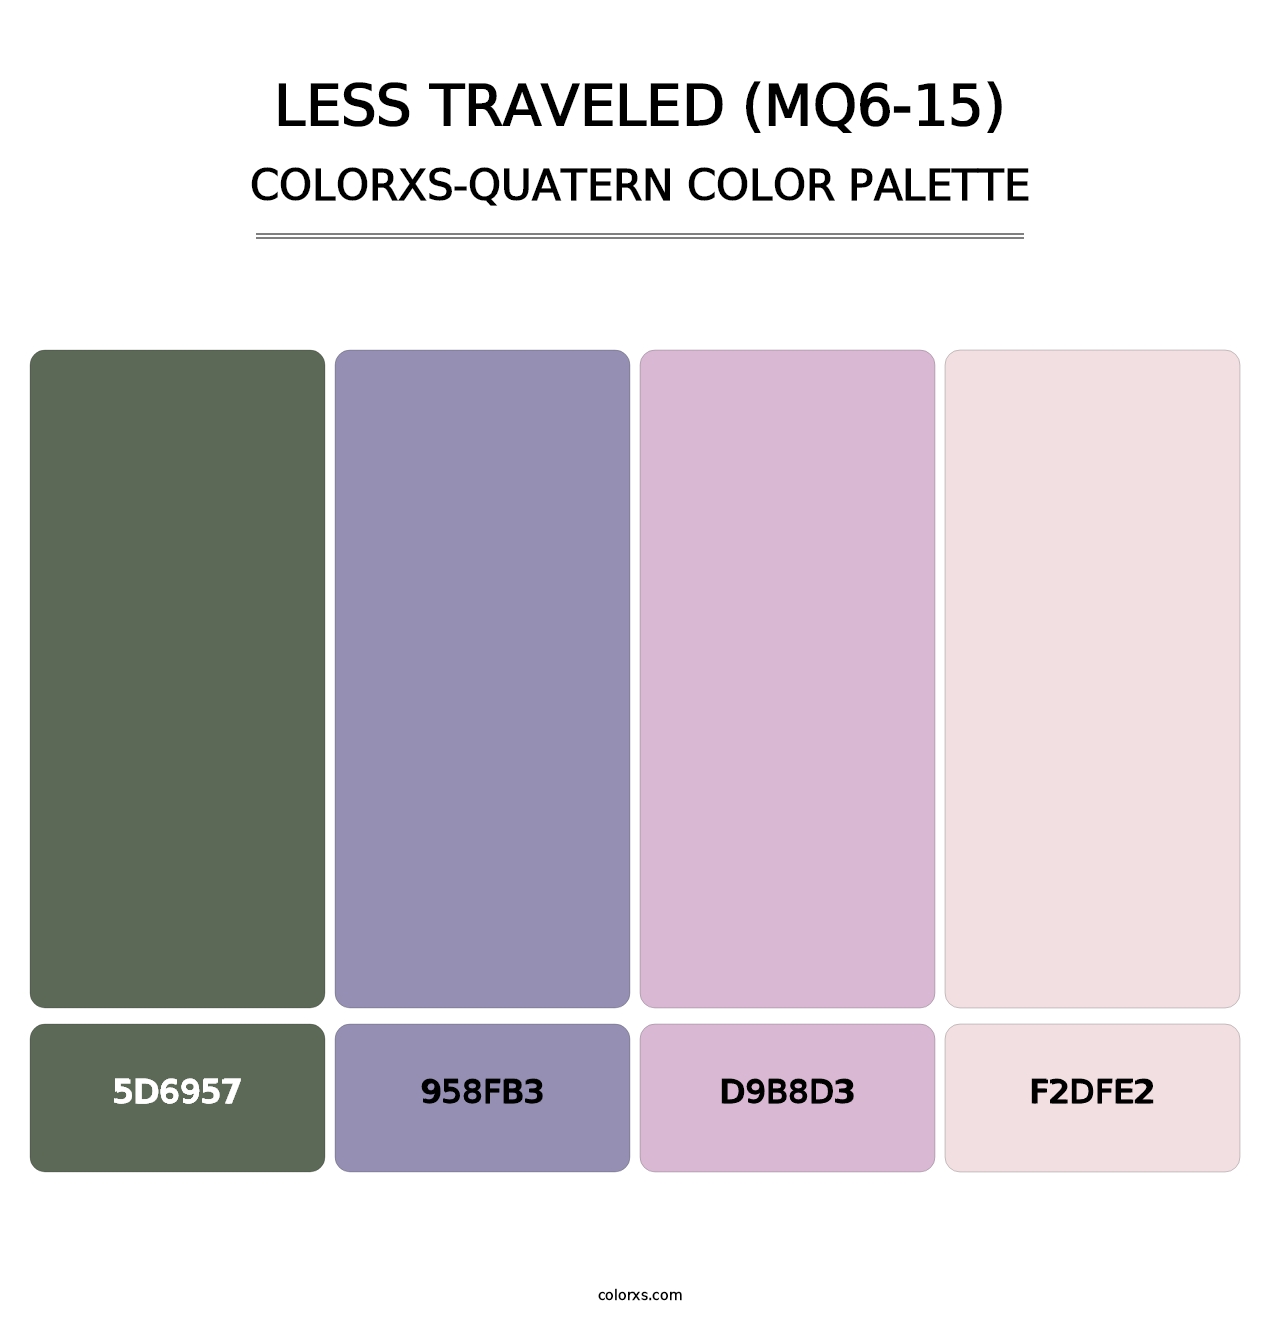 Less Traveled (MQ6-15) - Colorxs Quatern Palette